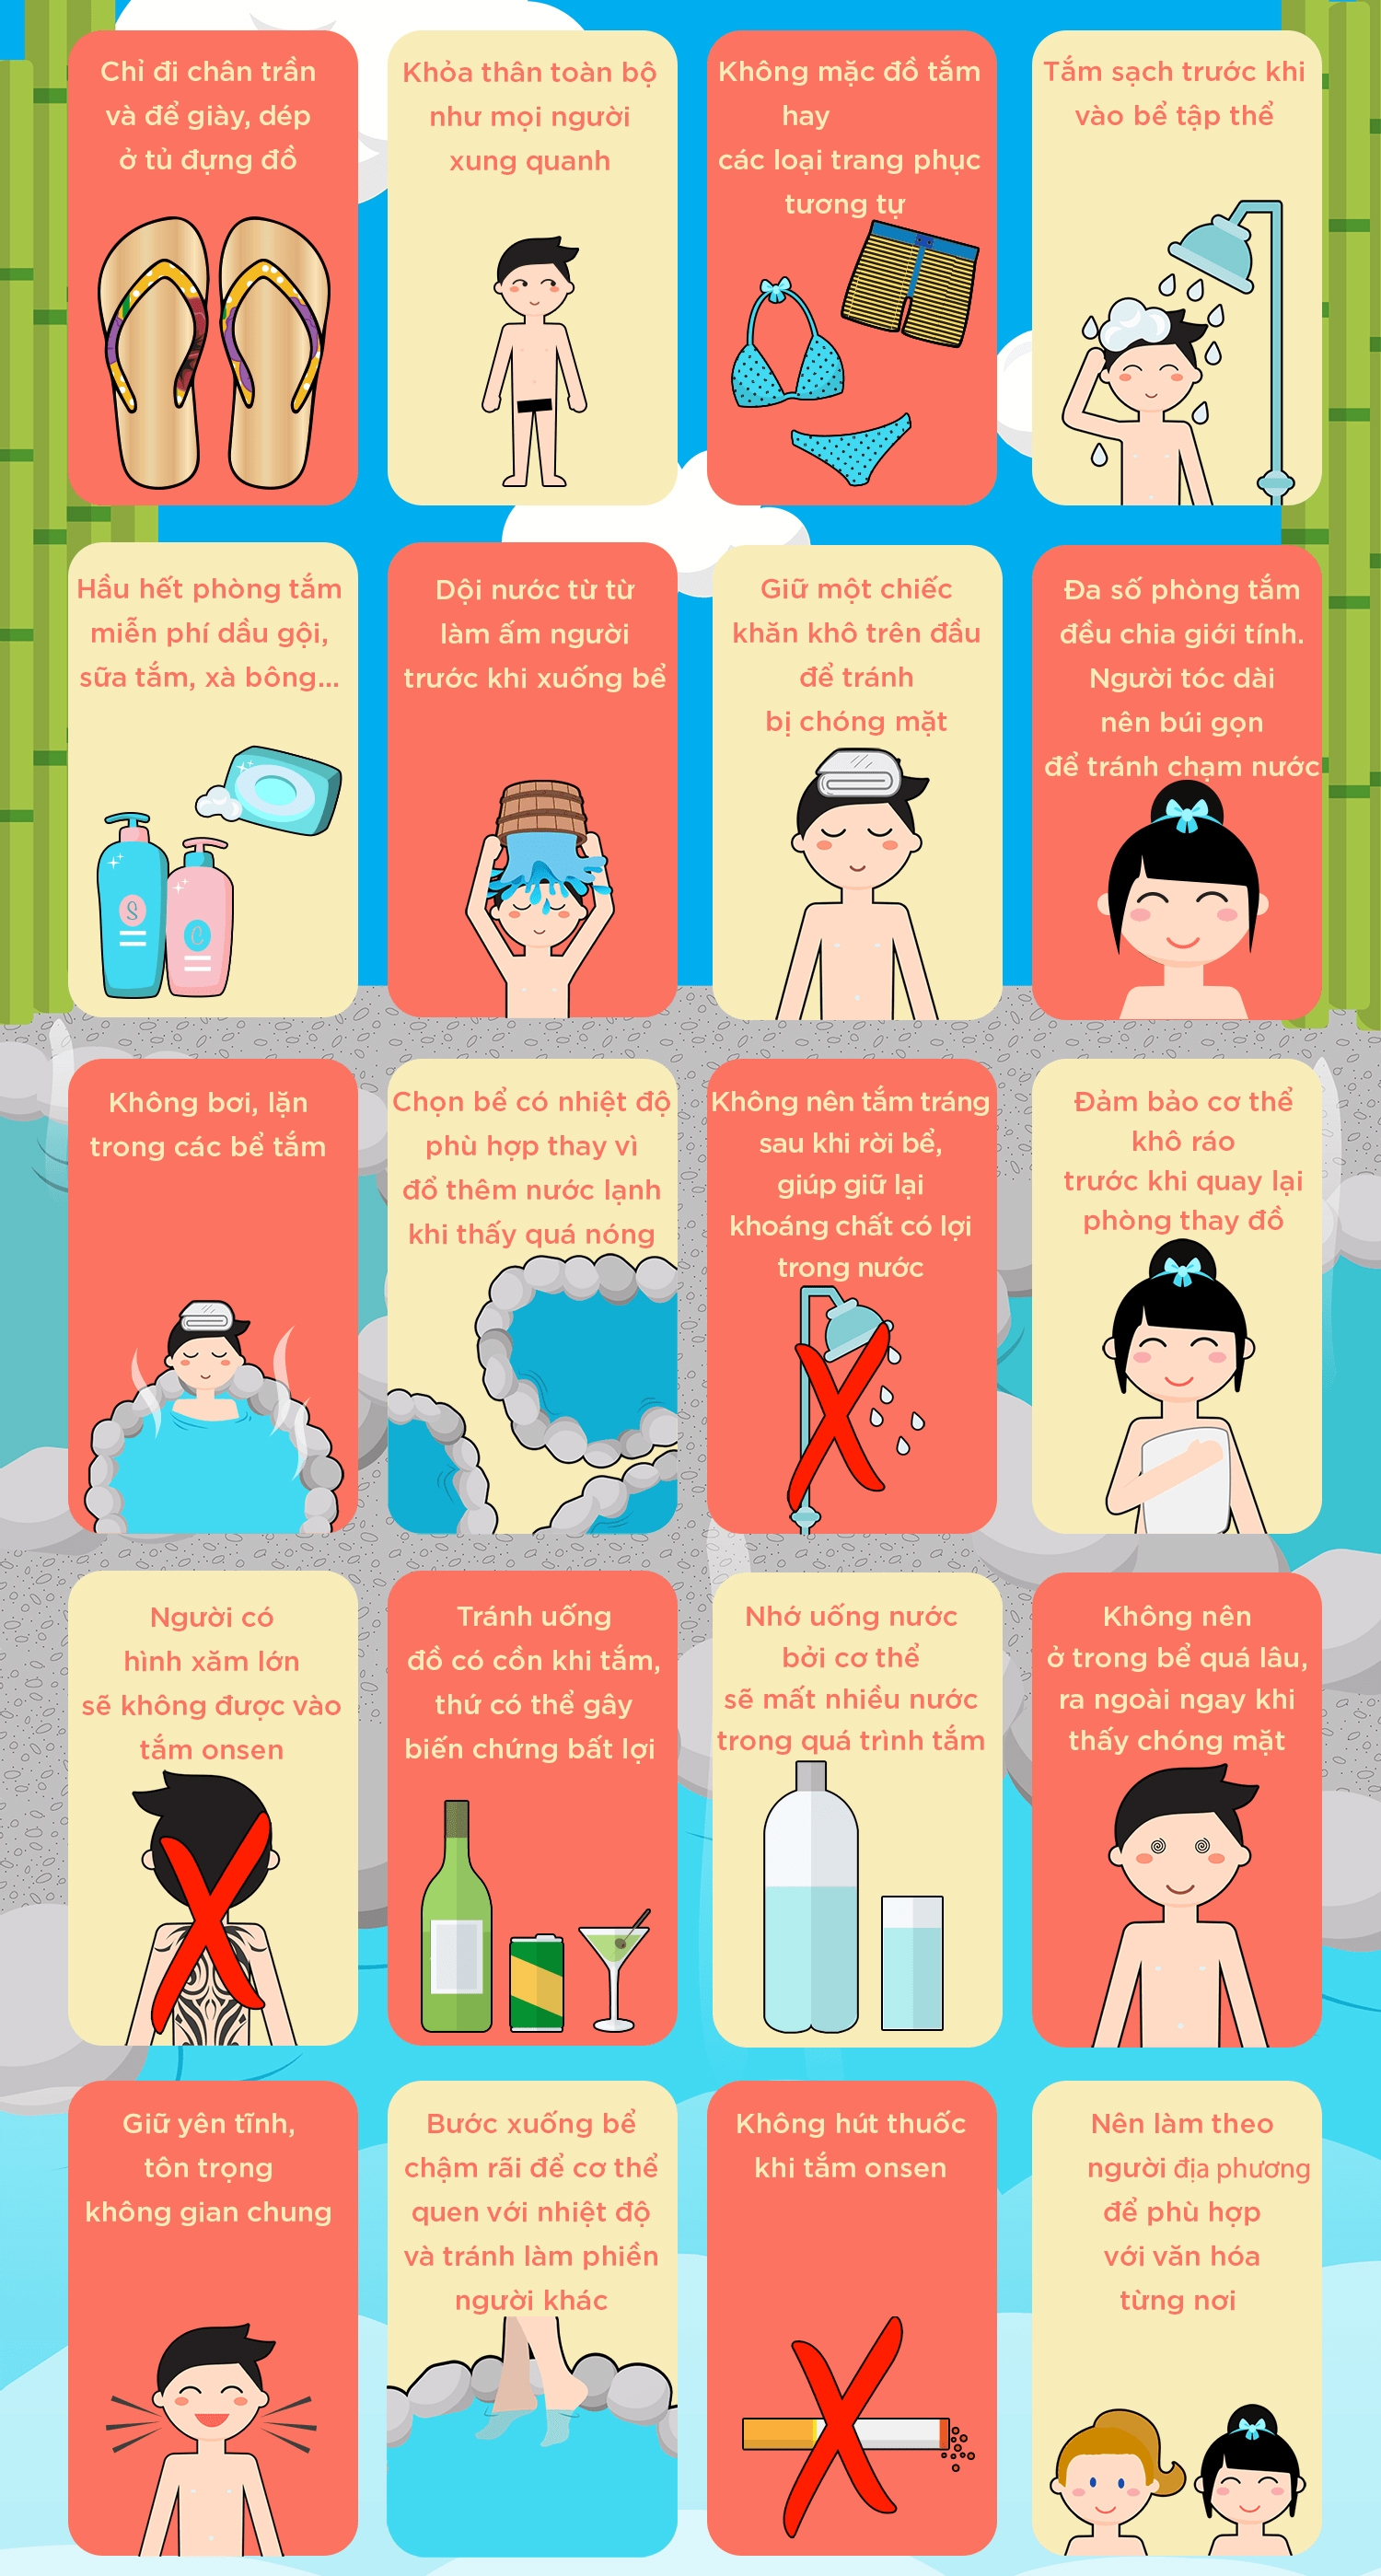 20 quy tắc cần biết khi tắm onsen